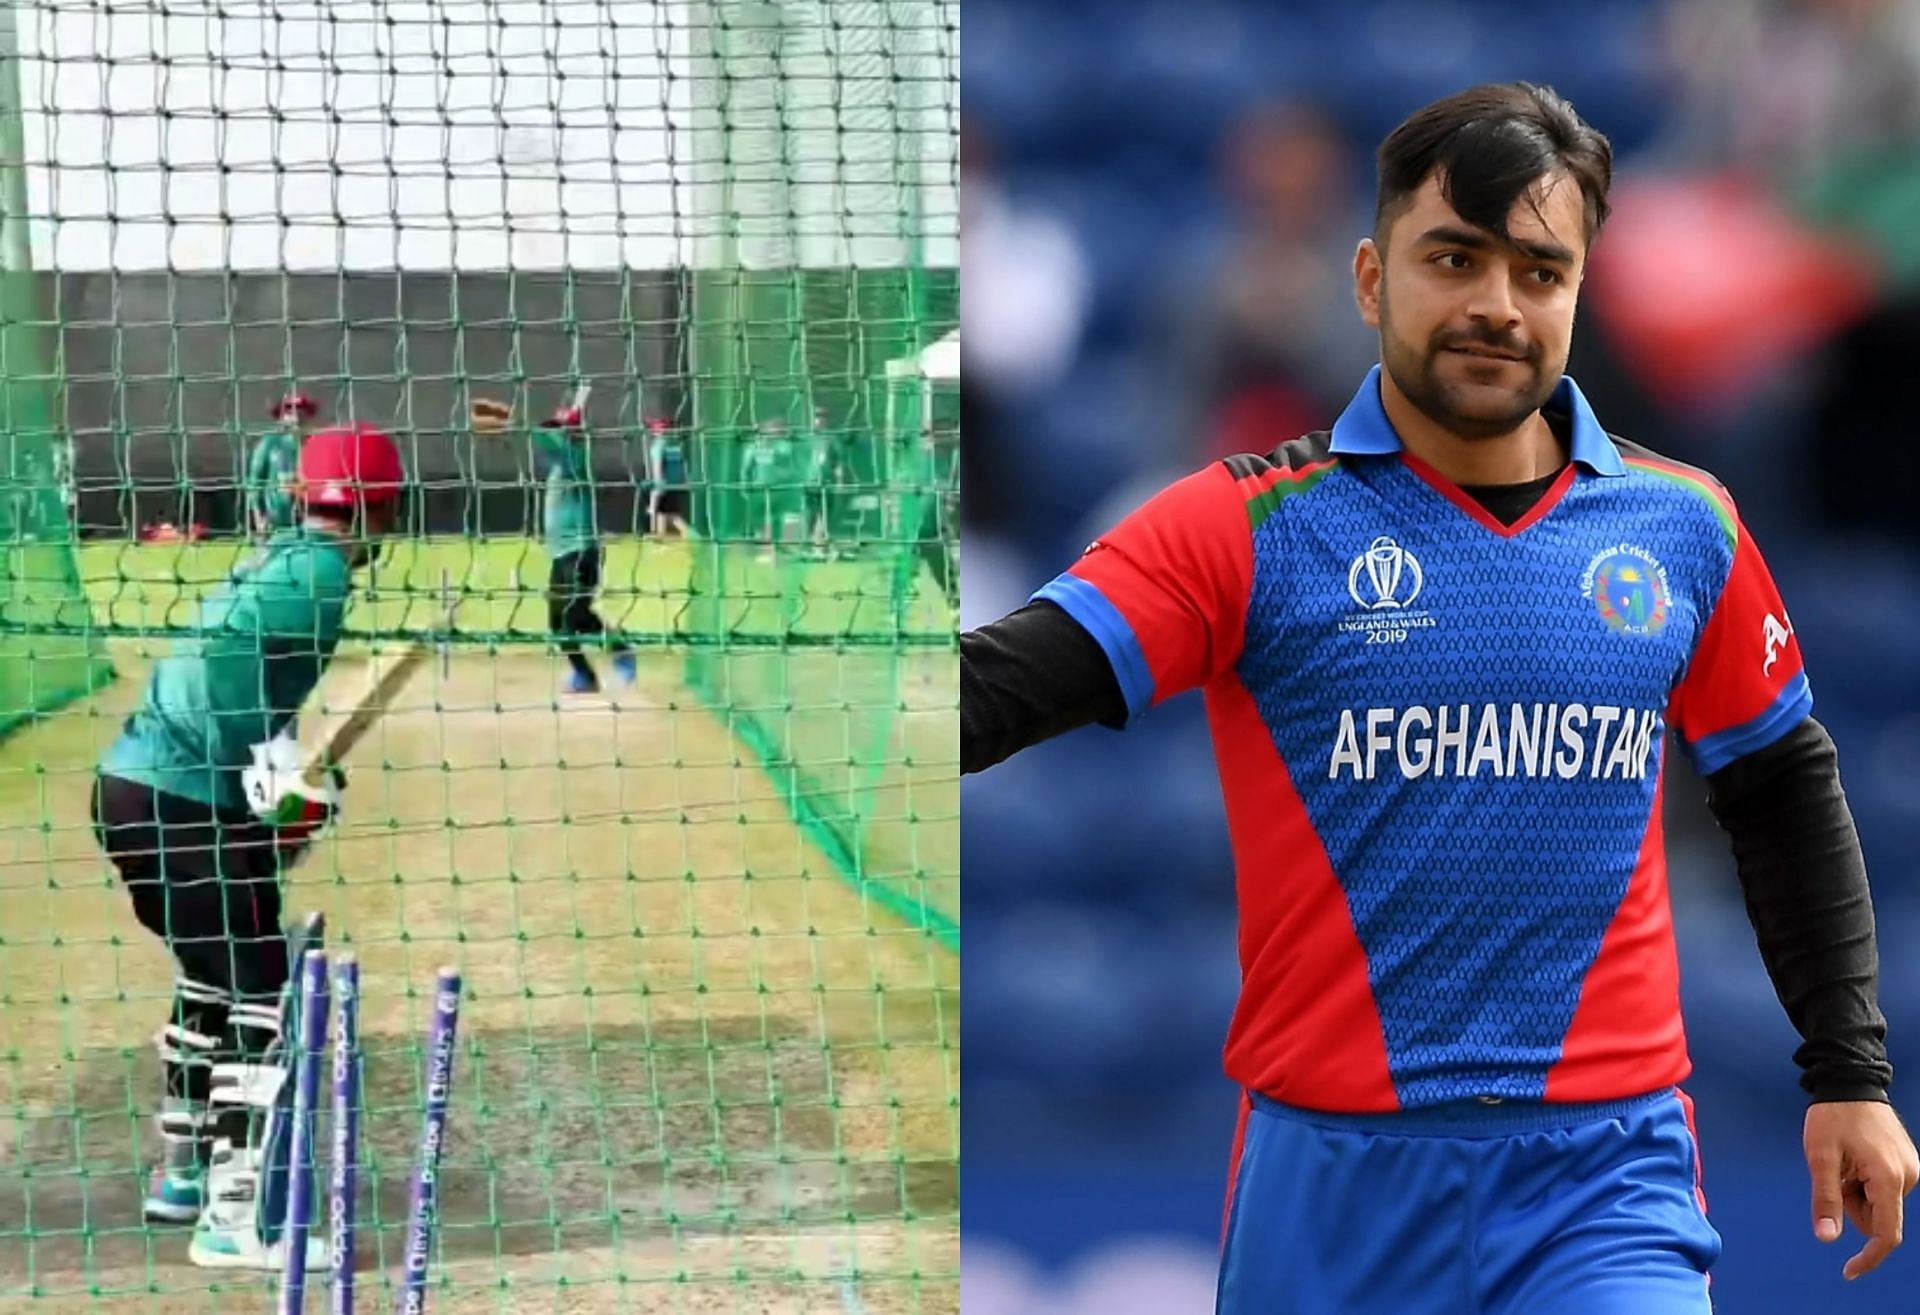 Rashid Khan batting in the nets ahead of the pivotal game against New Zealand tomorrow.